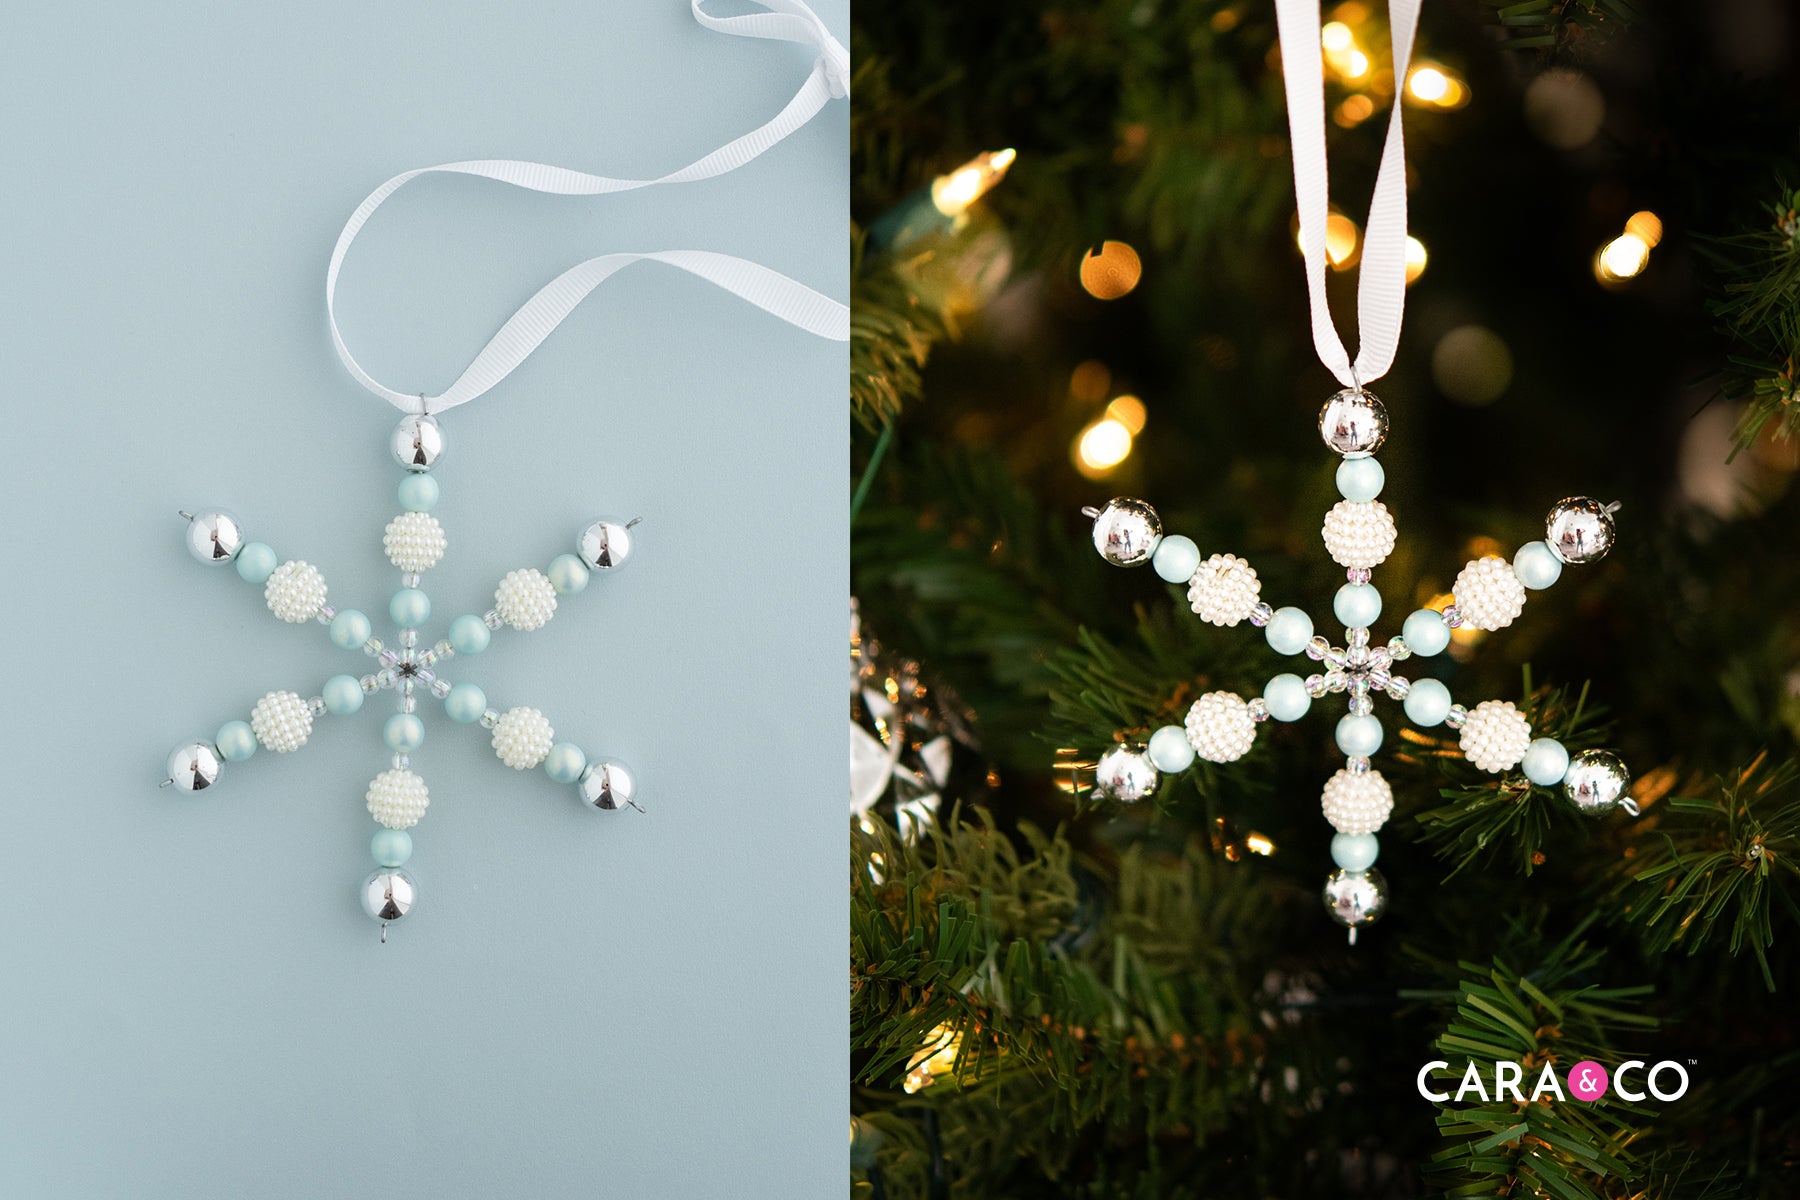 Cara&Co, Acrylic Beads